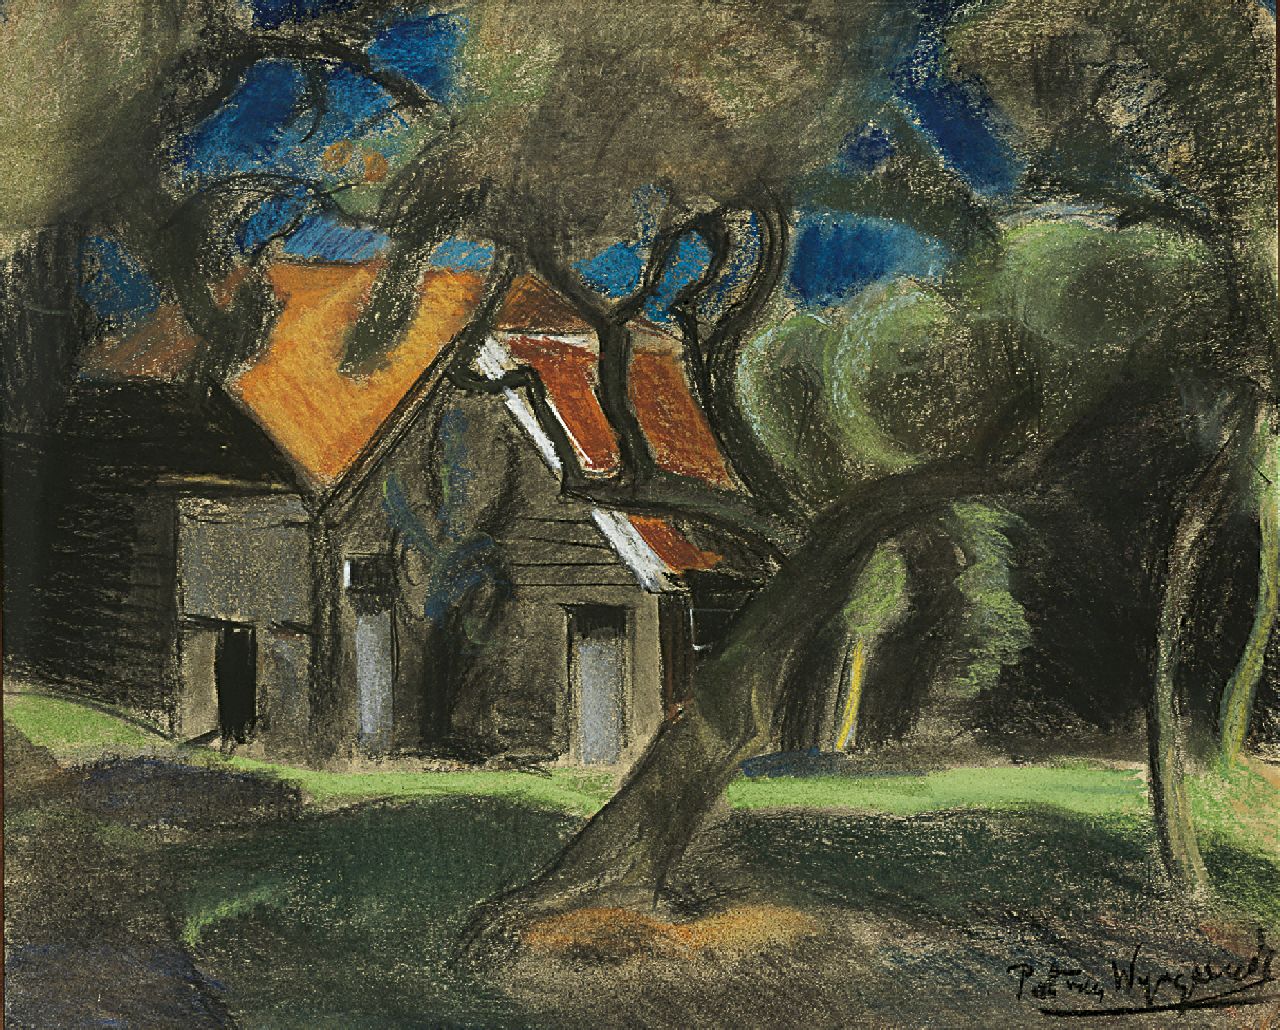 Wijngaerdt P.T. van | Petrus Theodorus 'Piet' van Wijngaerdt, A shed in a yard, Pastell auf Malerholzfaser 62,5 x 74,0 cm, signed l.r. und painted between 1918-1921